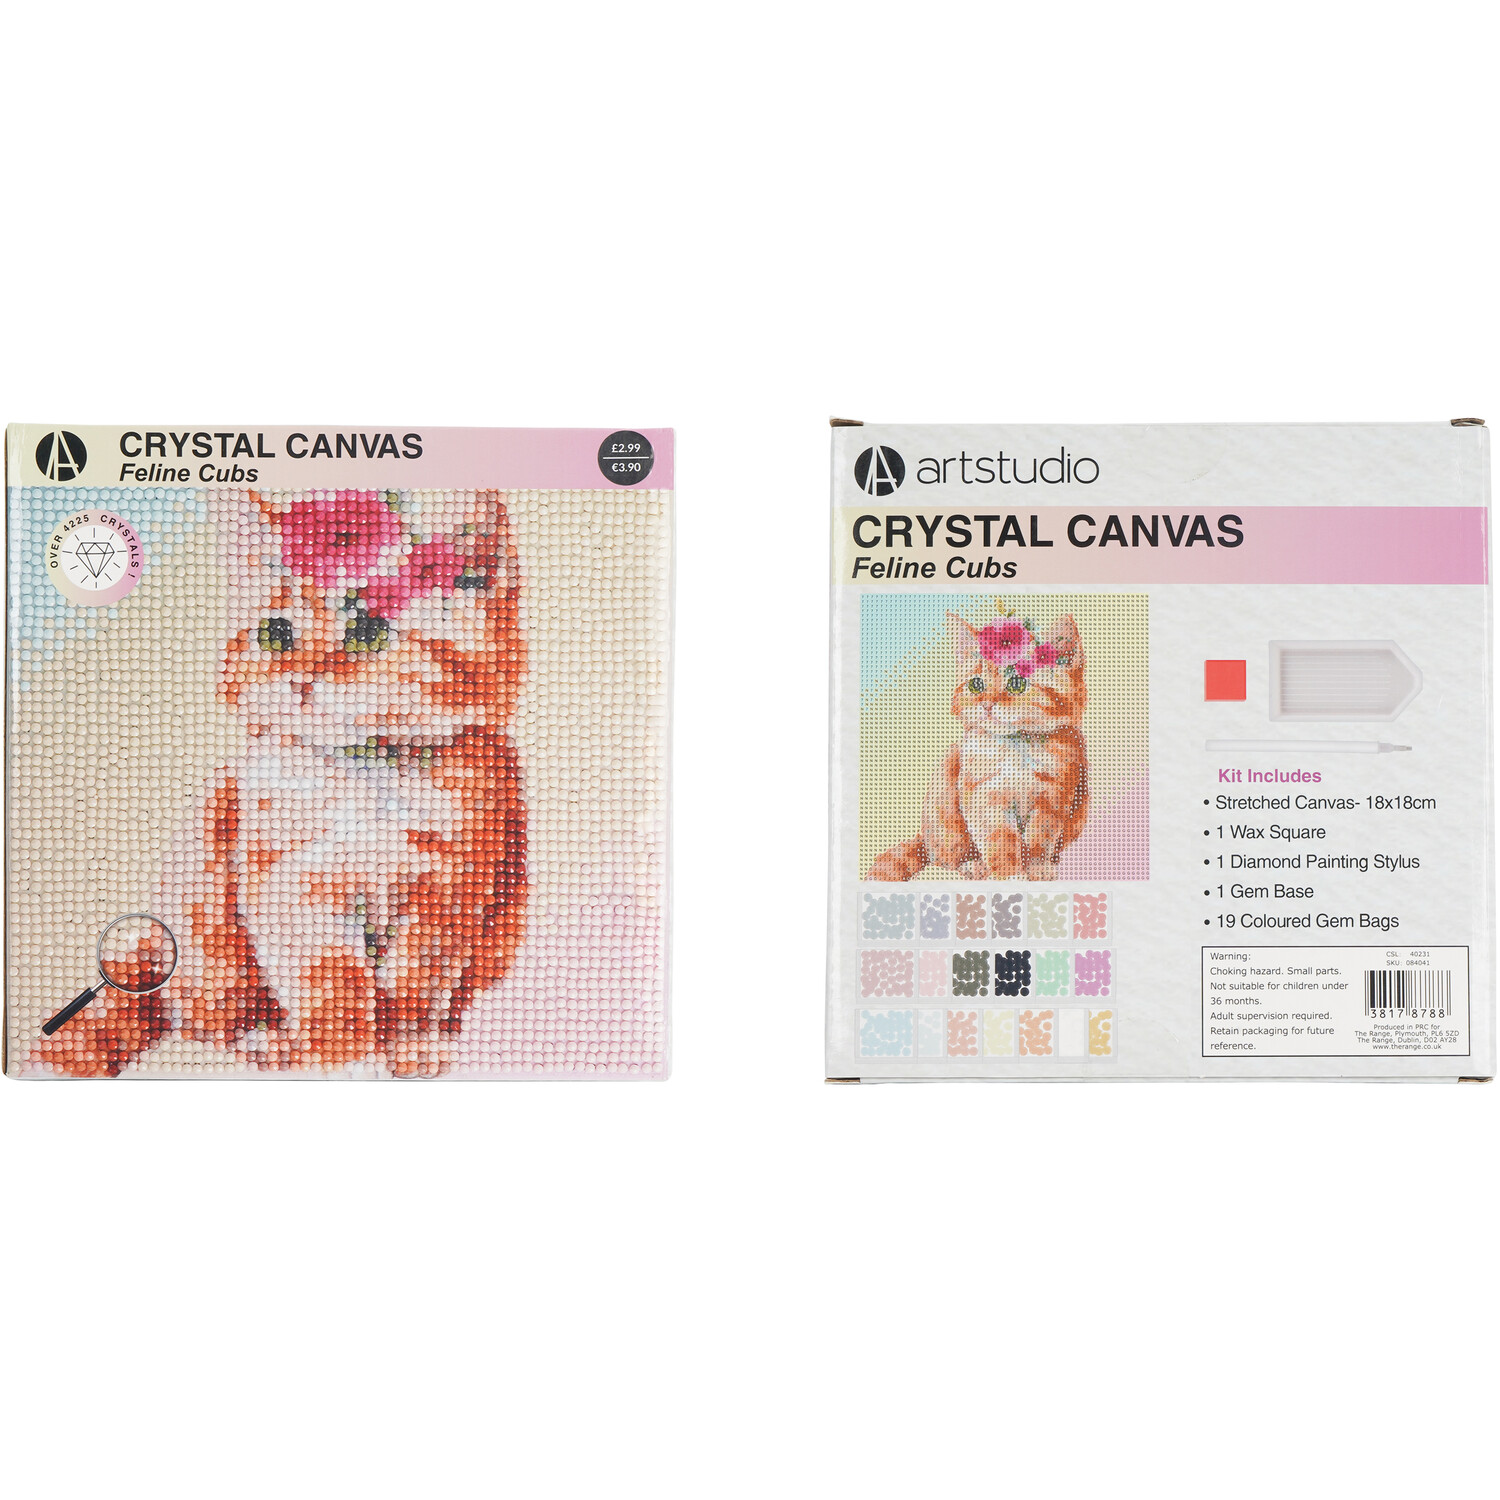 Crystal Canvas Feline Cubs Image 2